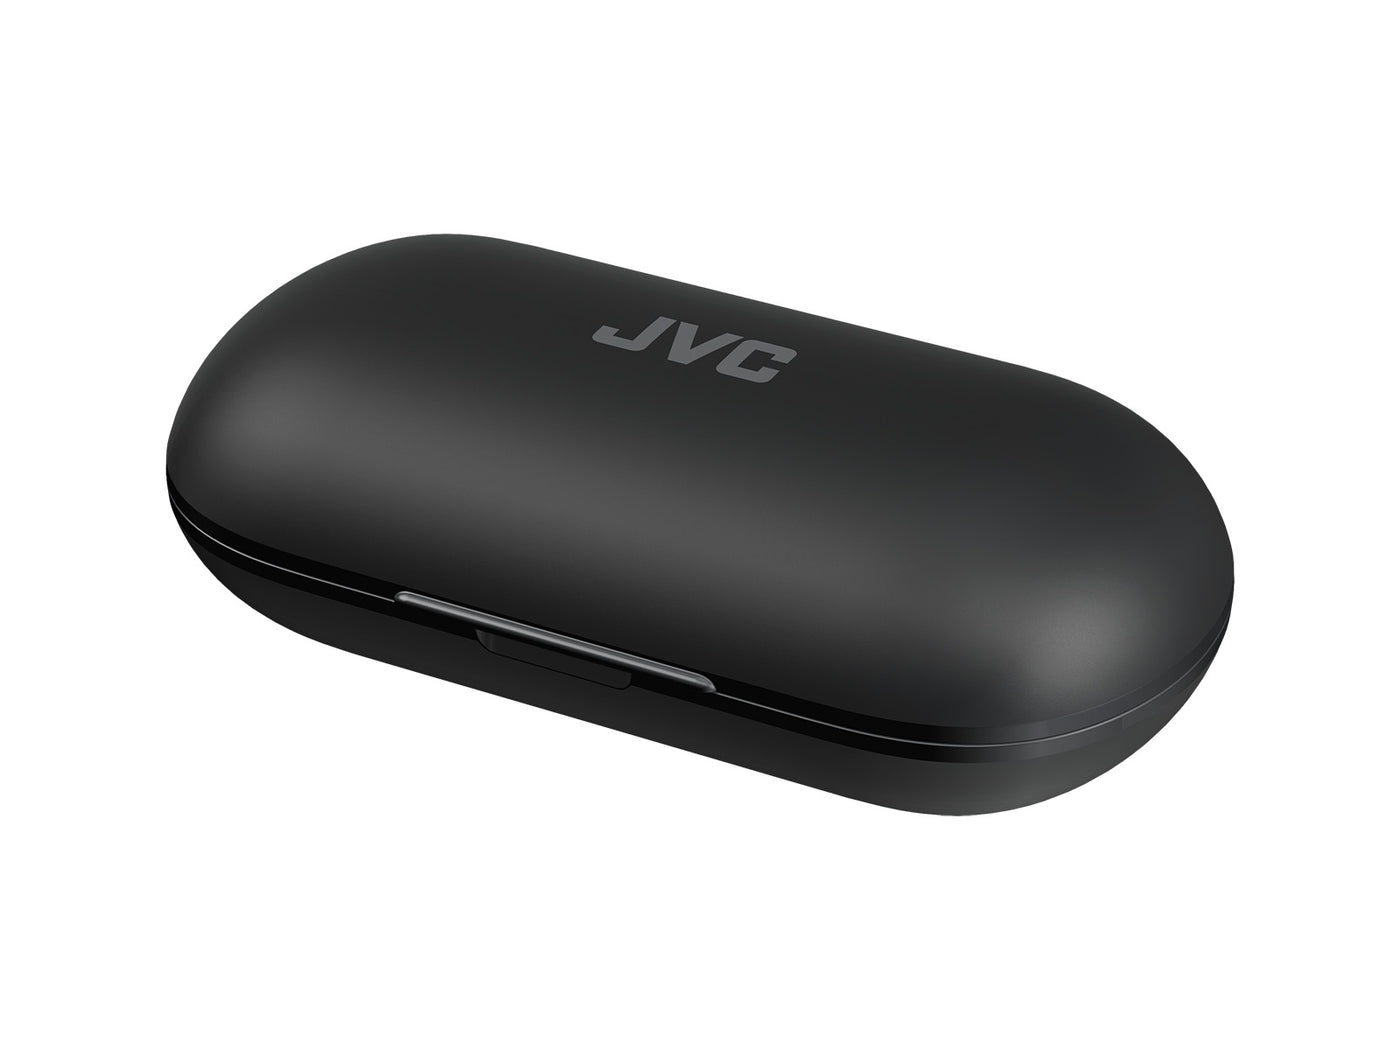 JVC RIPTIDZ True Wireless Headphones HA-A9T Black/Noir for sale online